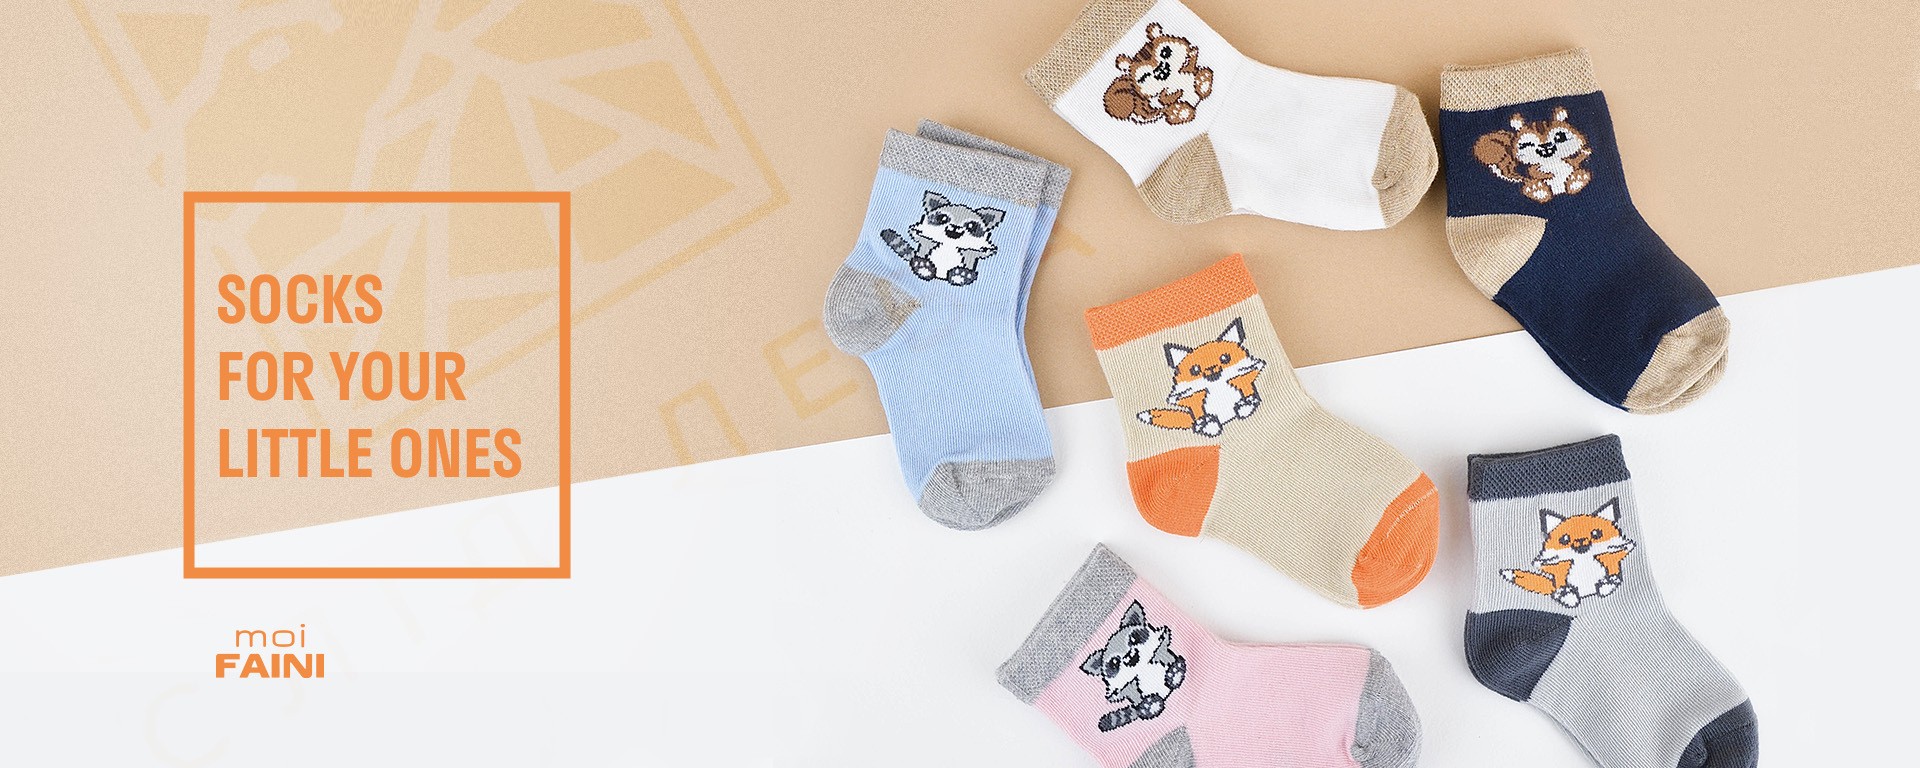 Socks for your kids